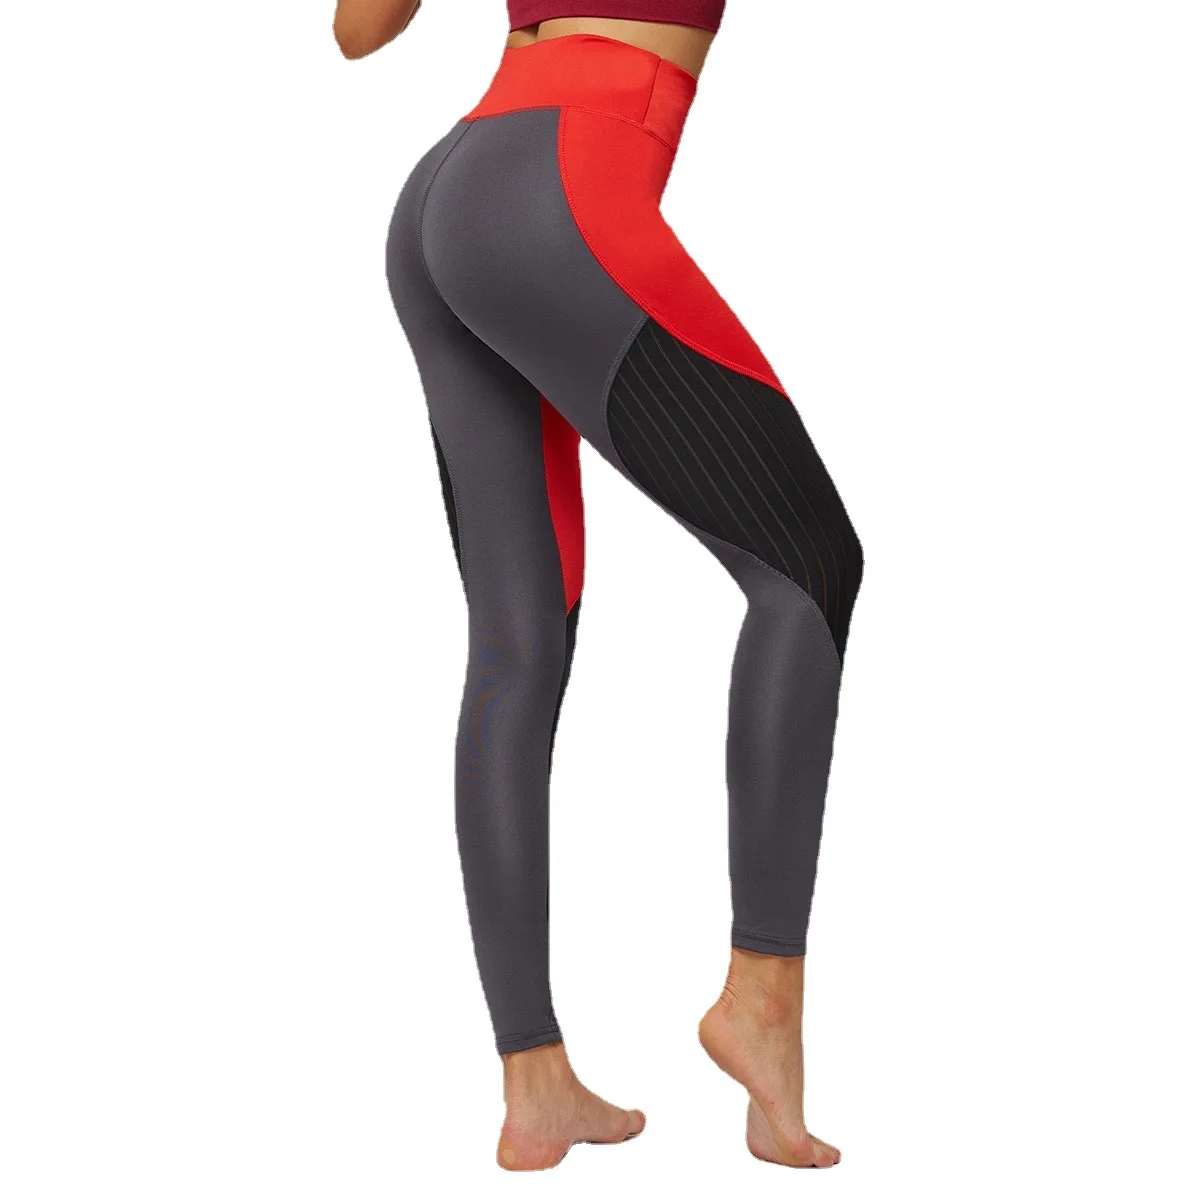 

Yoga pants female outdoor sports pants high elasticity buttocks nine-point pants high waist leggings, Red gray